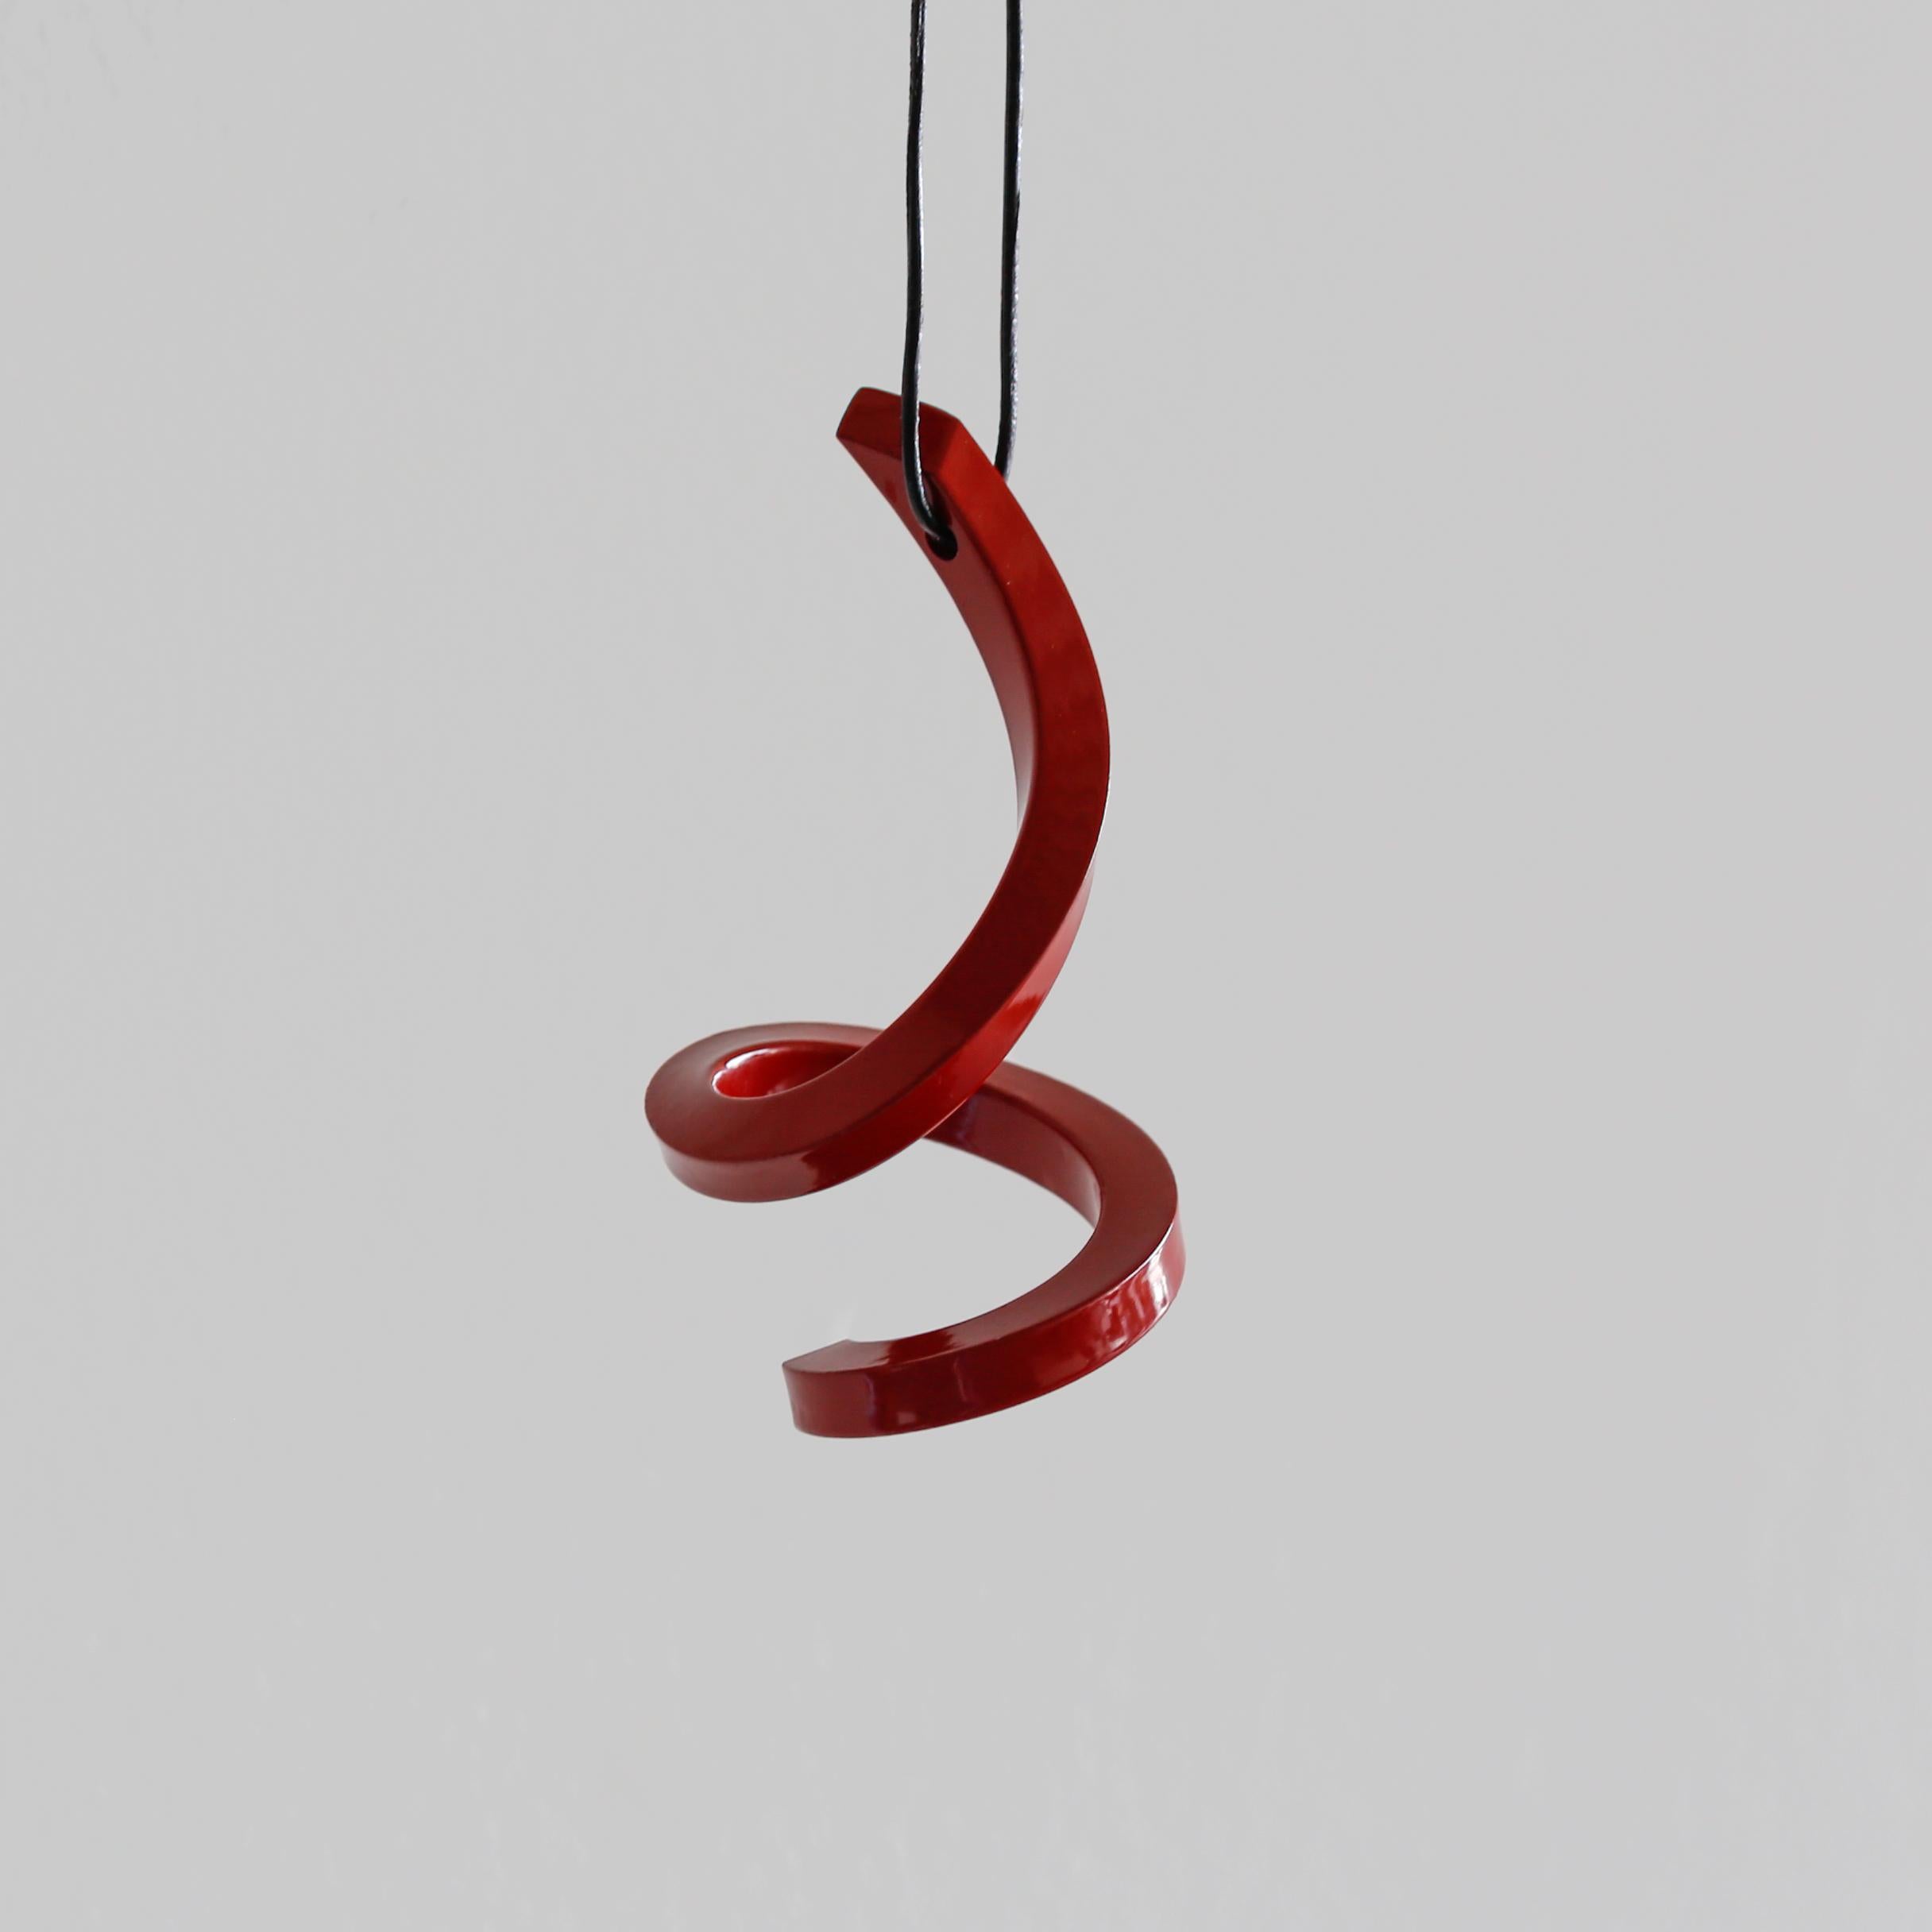 Red Ribbon 7 - Sculpture by Morgan Robinson